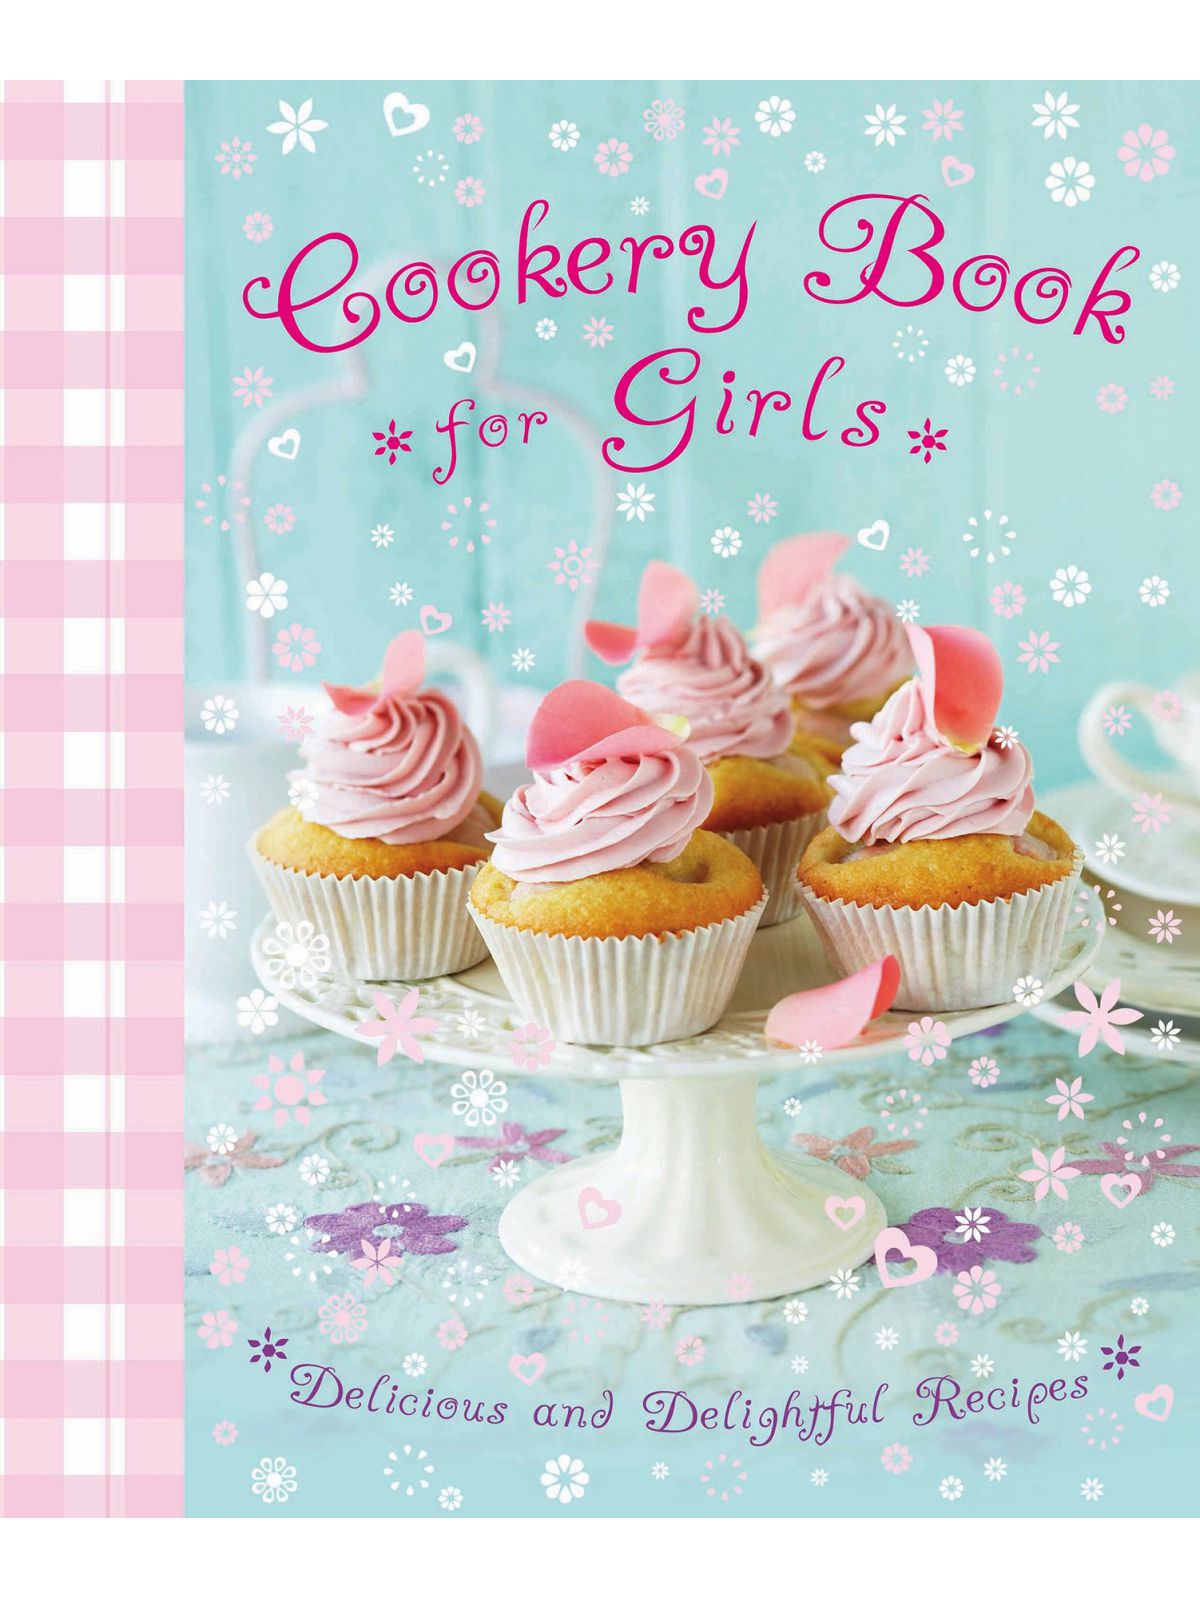 COOKERY BOOK FOR GIRLS  Купить Книгу на Английском